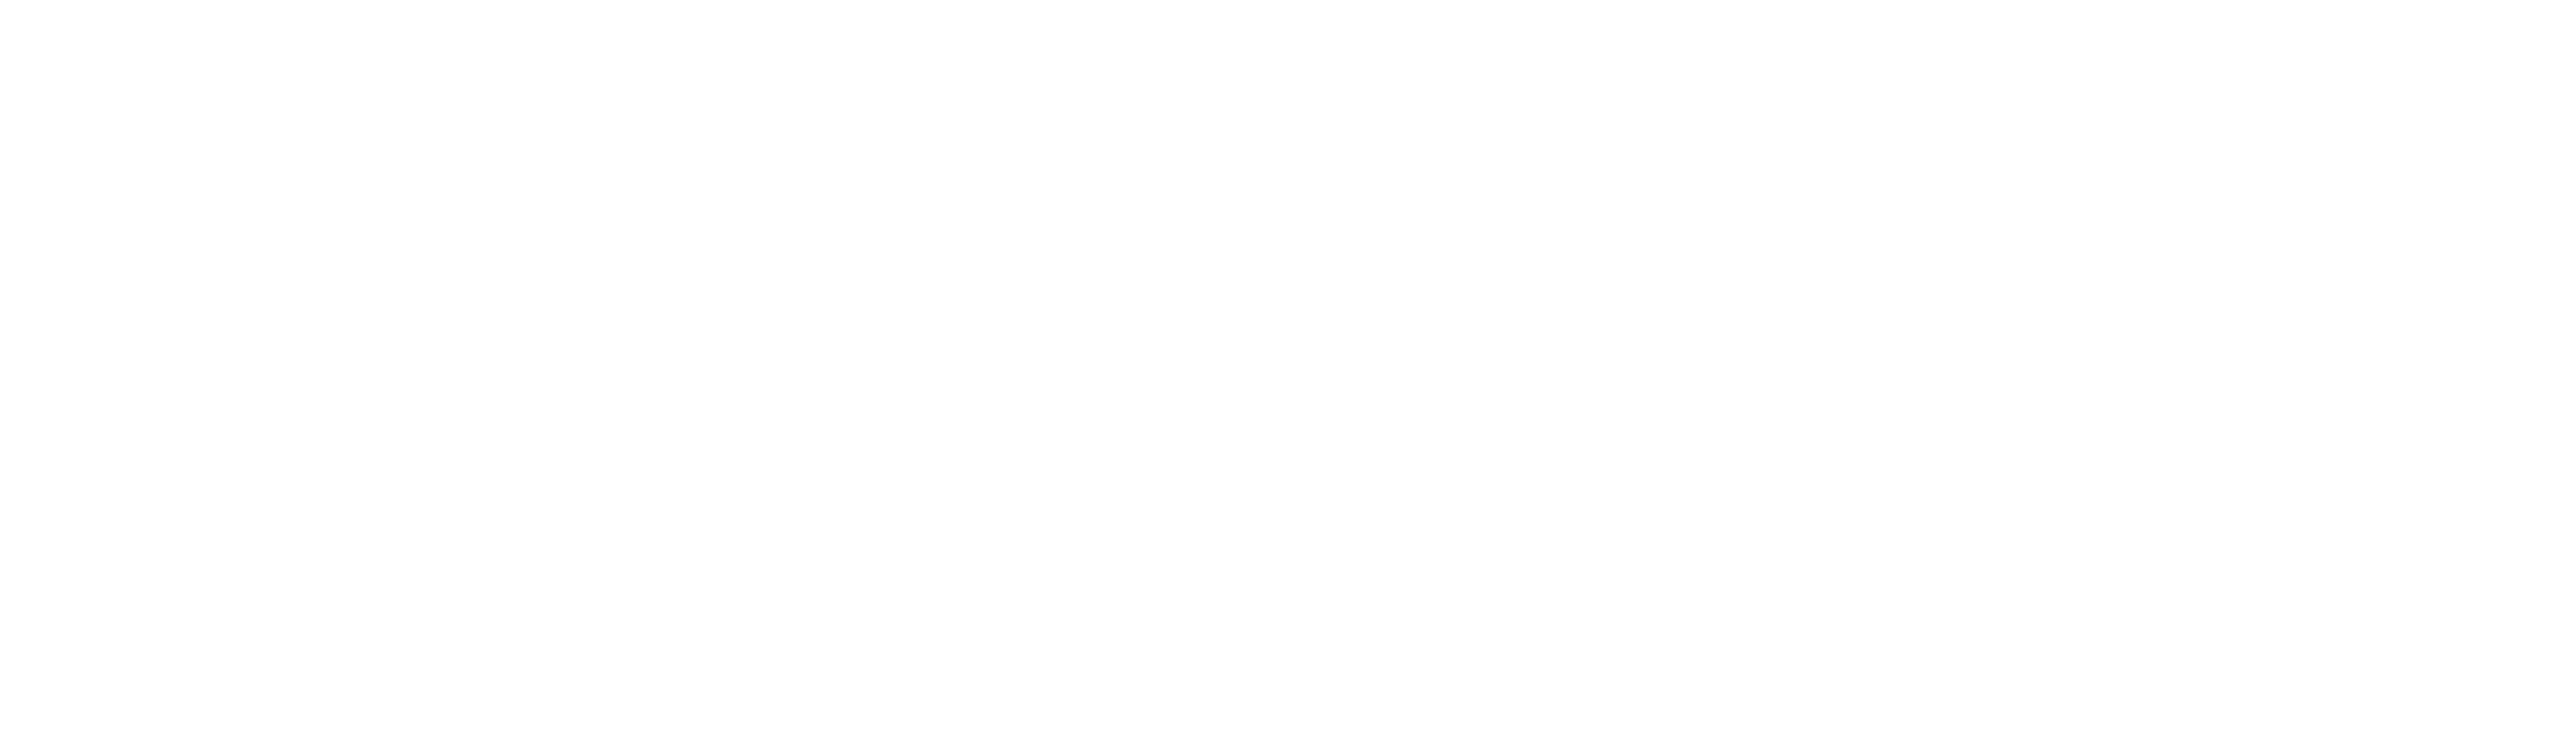 Pantheretr ||